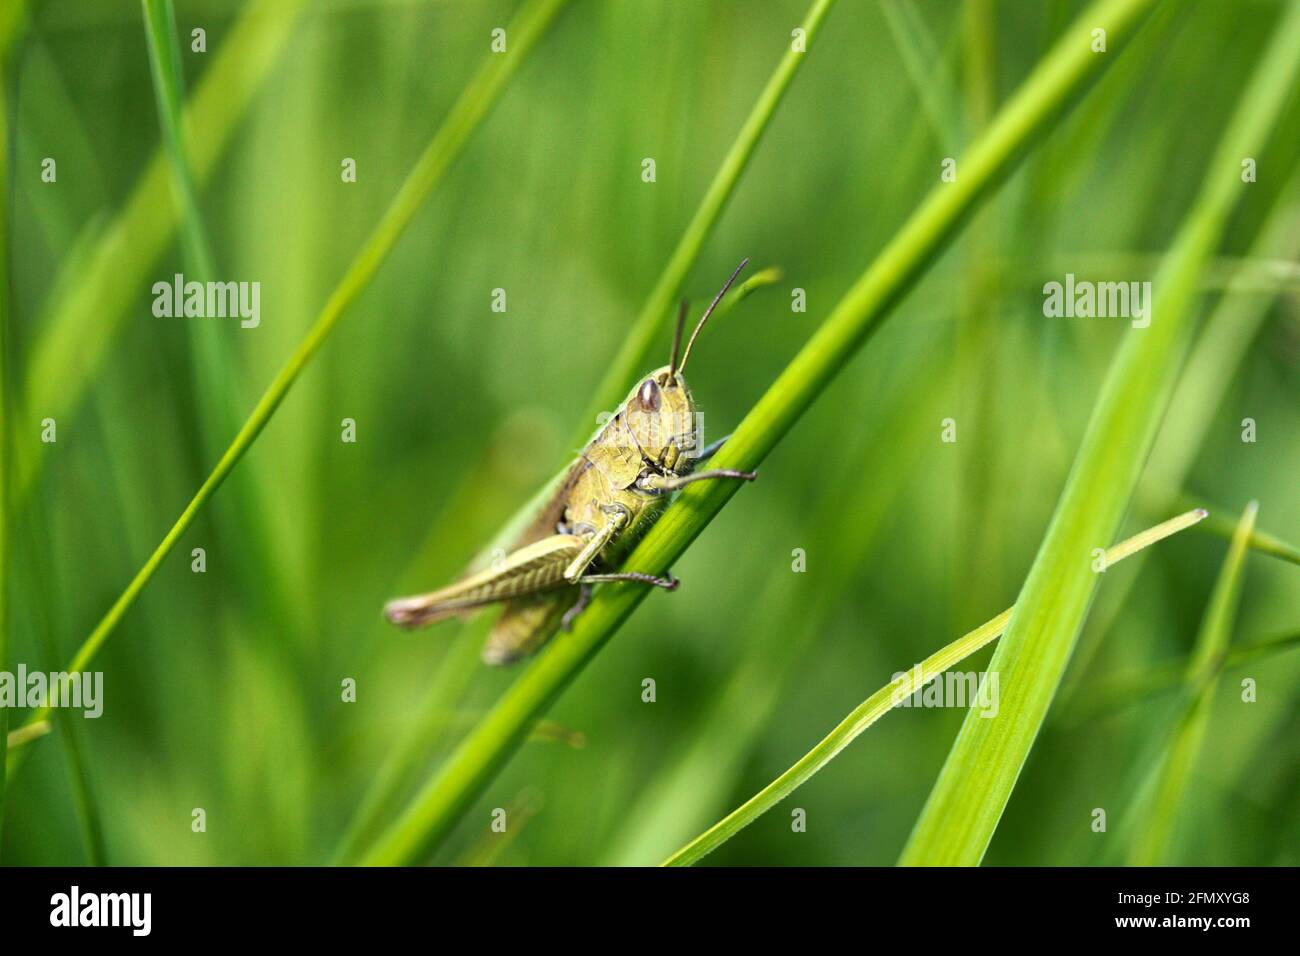 Common grasshopper sitting on blade of grass. Stock Photo